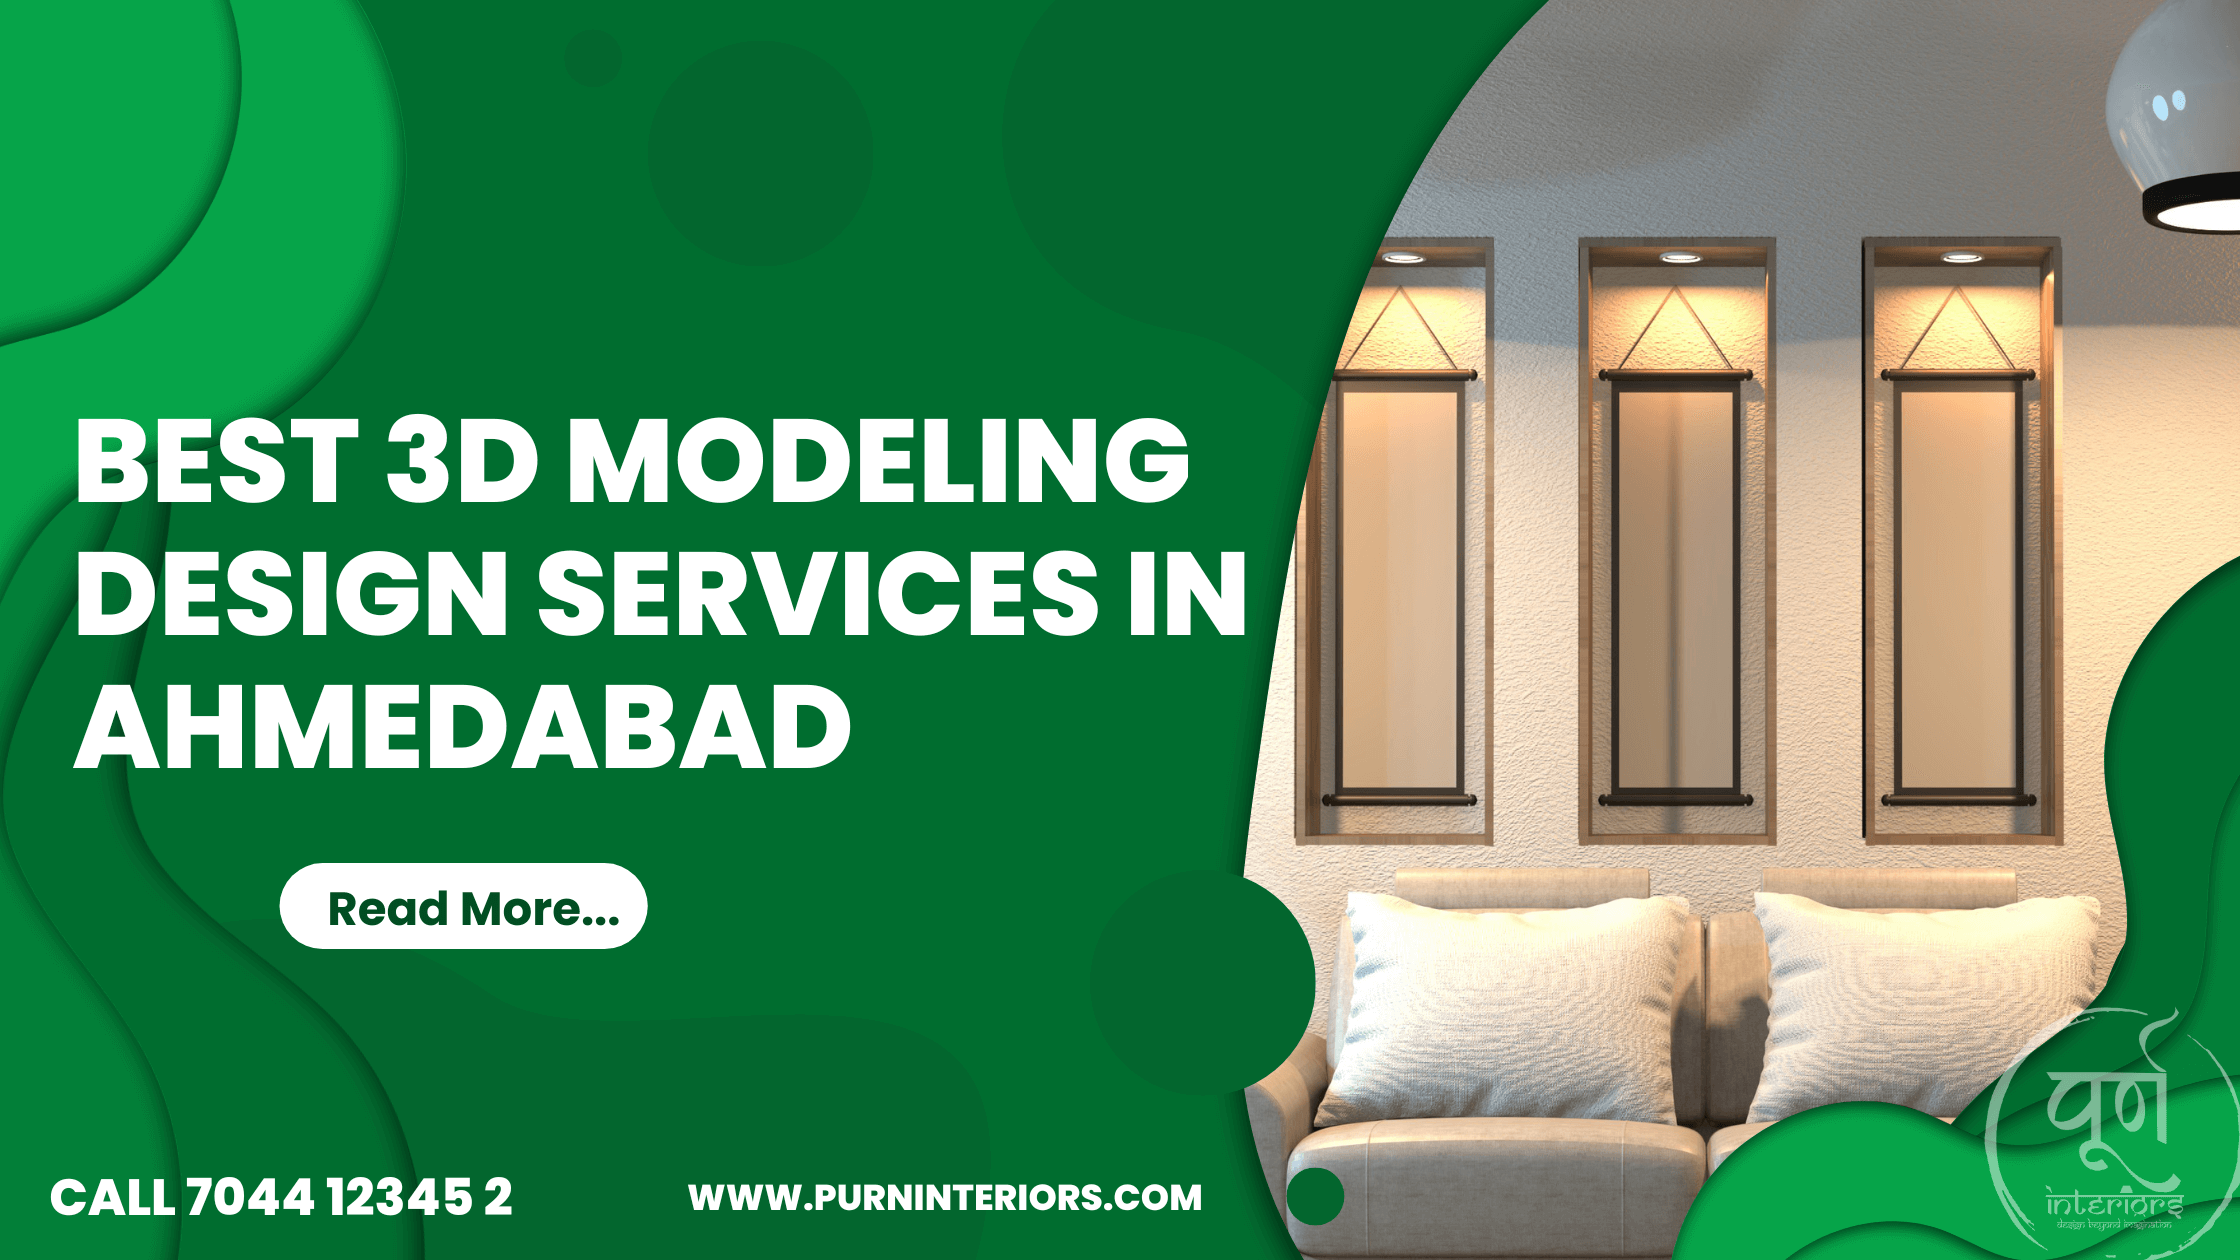 Best 3D Modeling Design Services in Ahmedabad